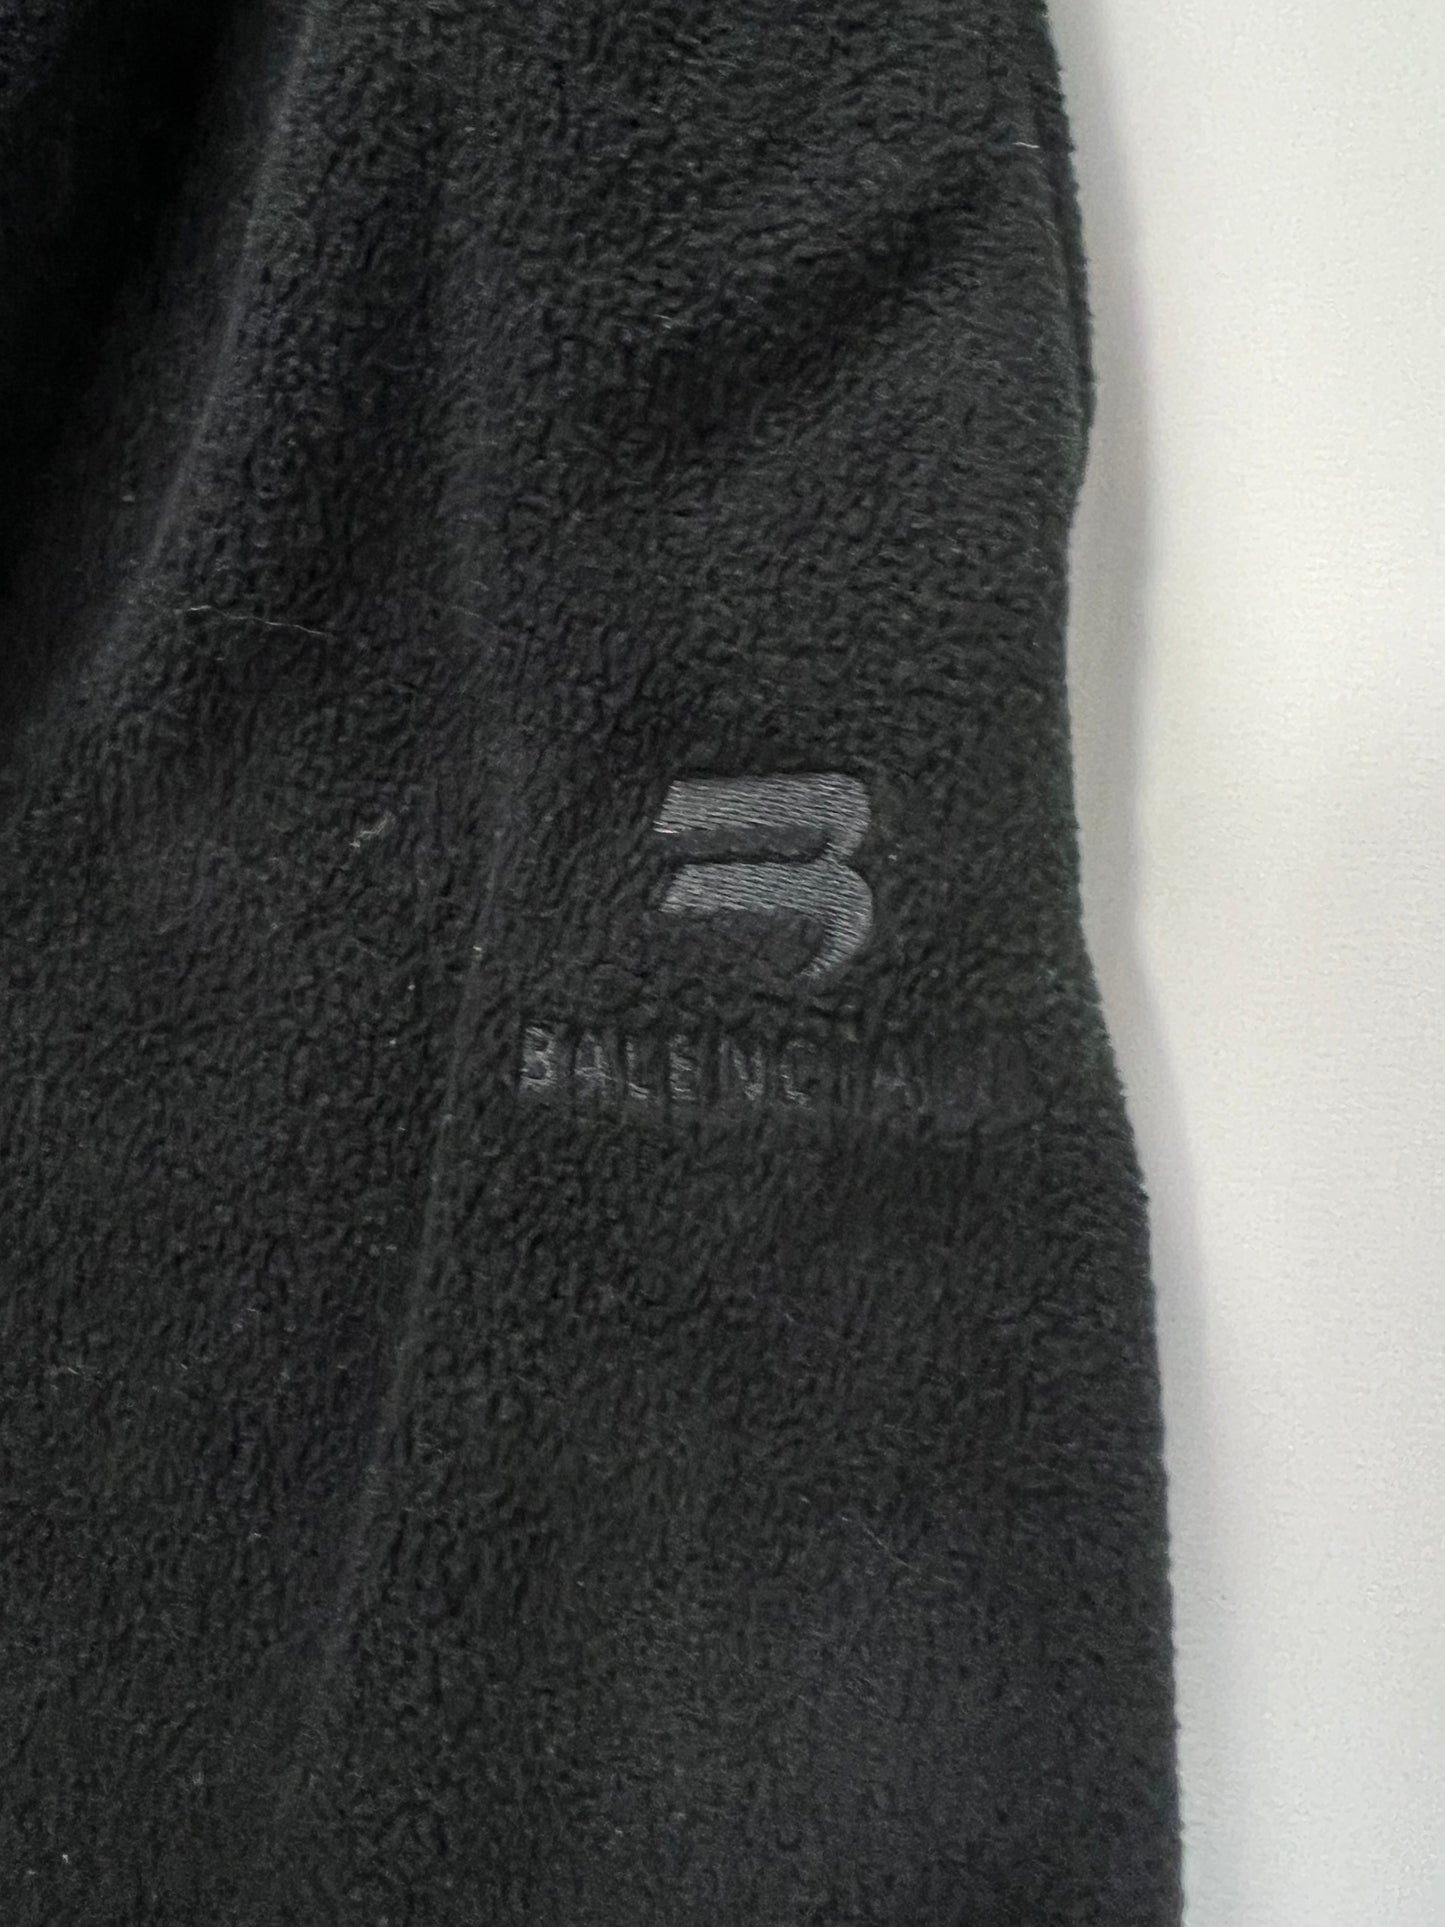 Balenciaga AW21 fleece sporty B baggy sweatpants SZ:XS